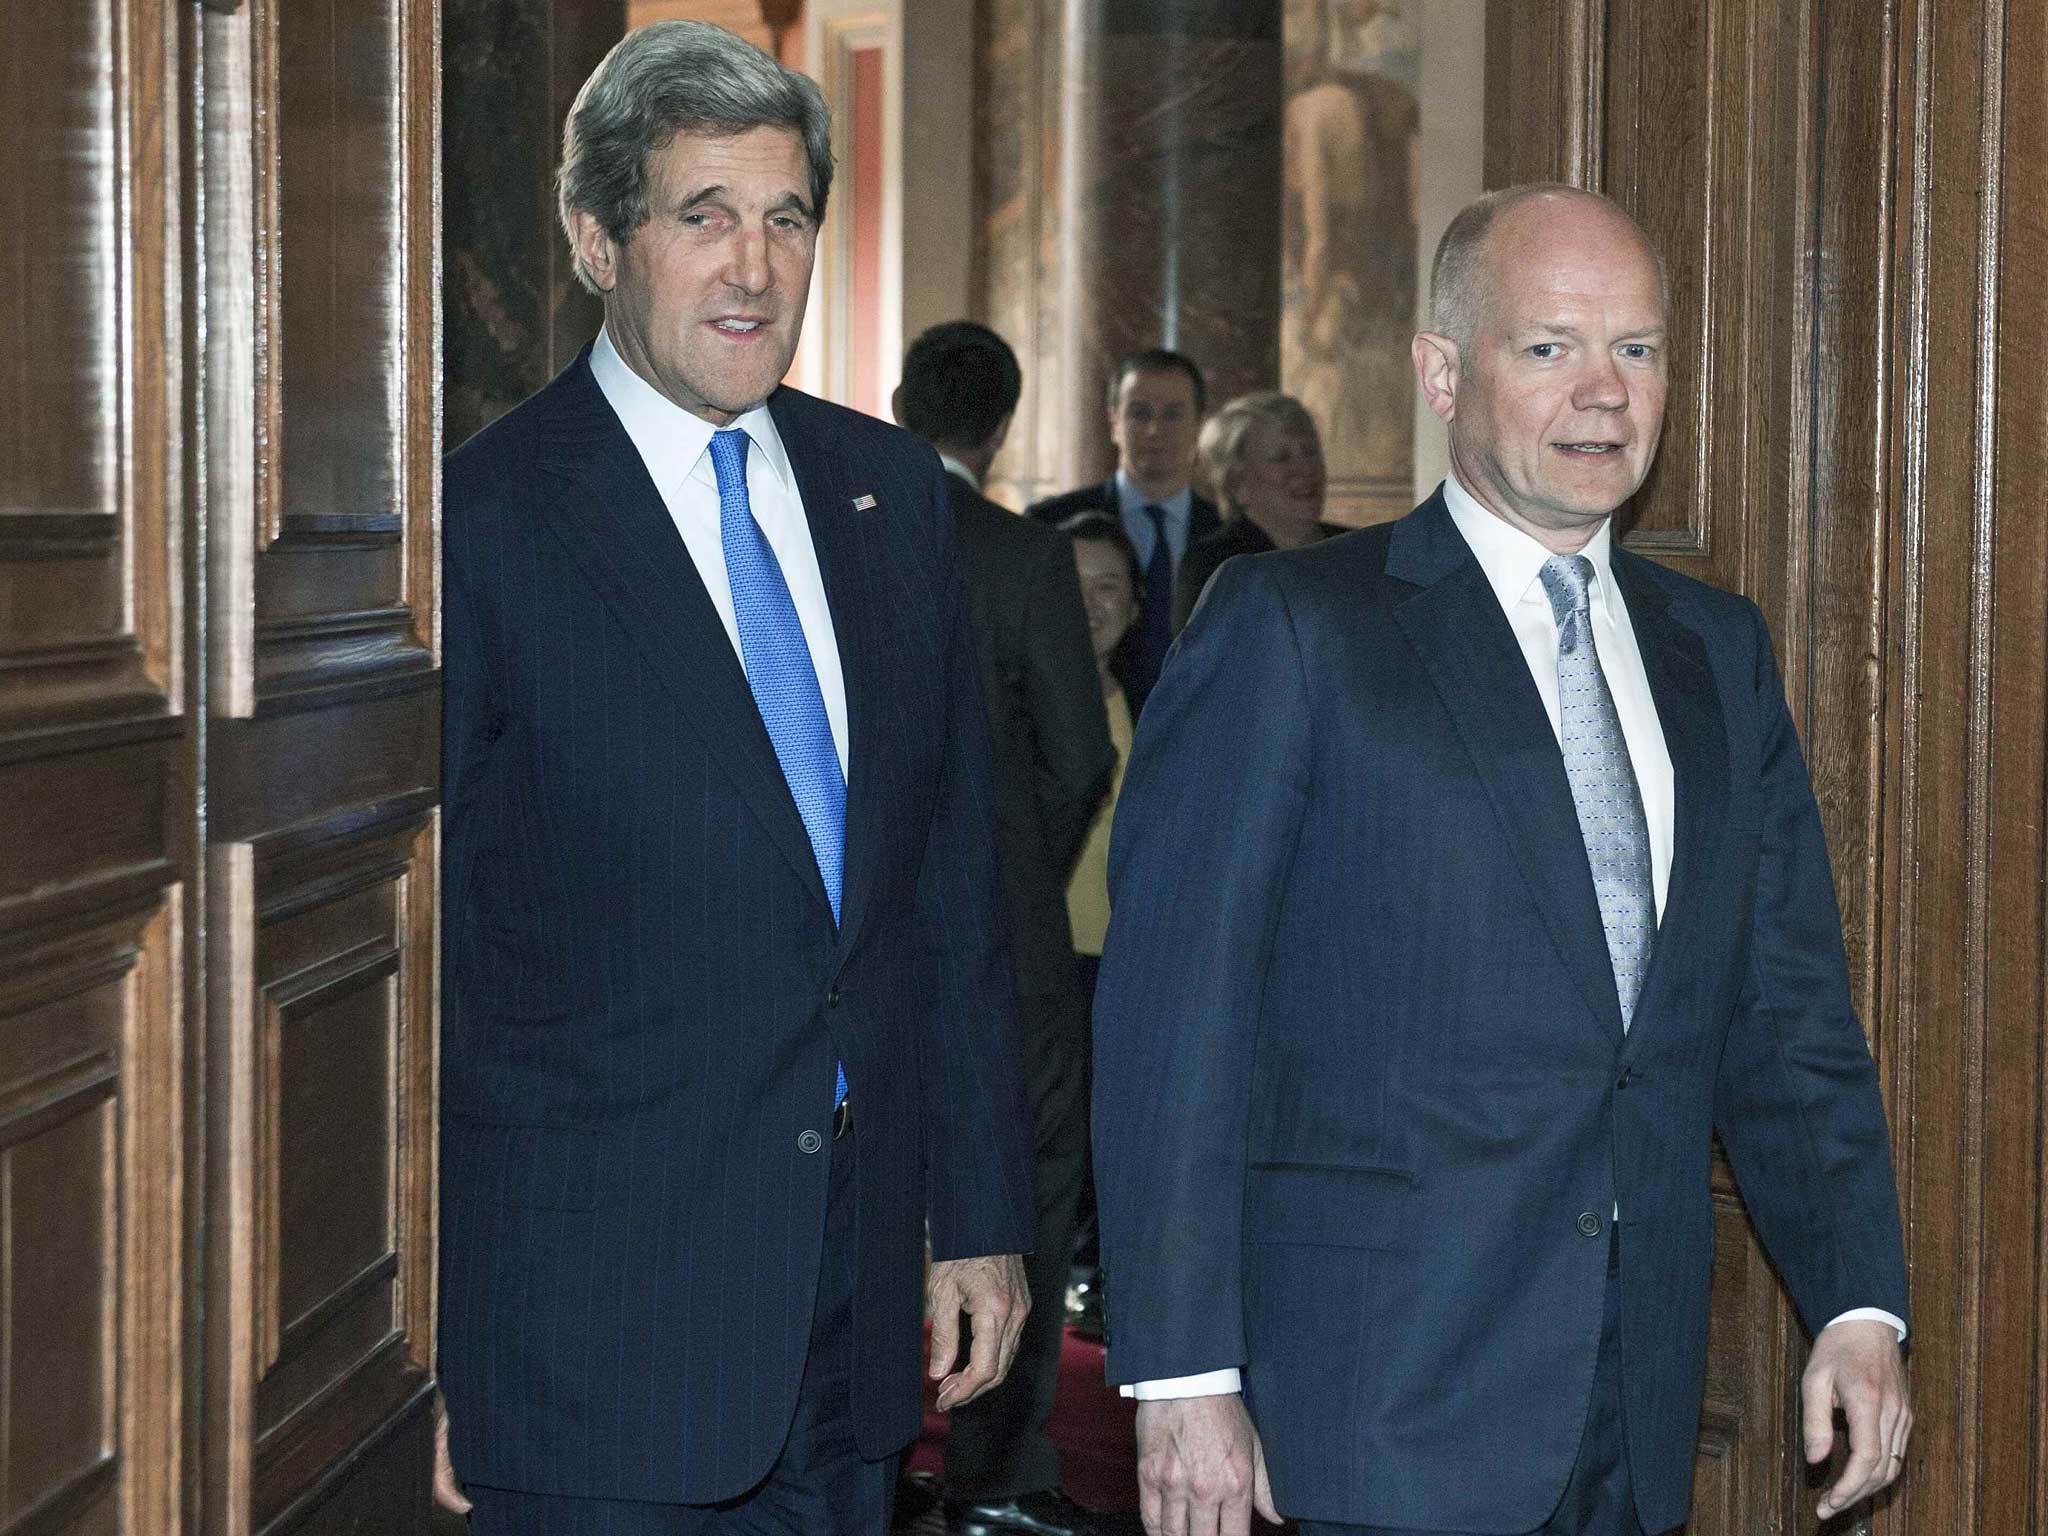 Foreign Secretary William Hague walks with US Secretary of State John Kerry